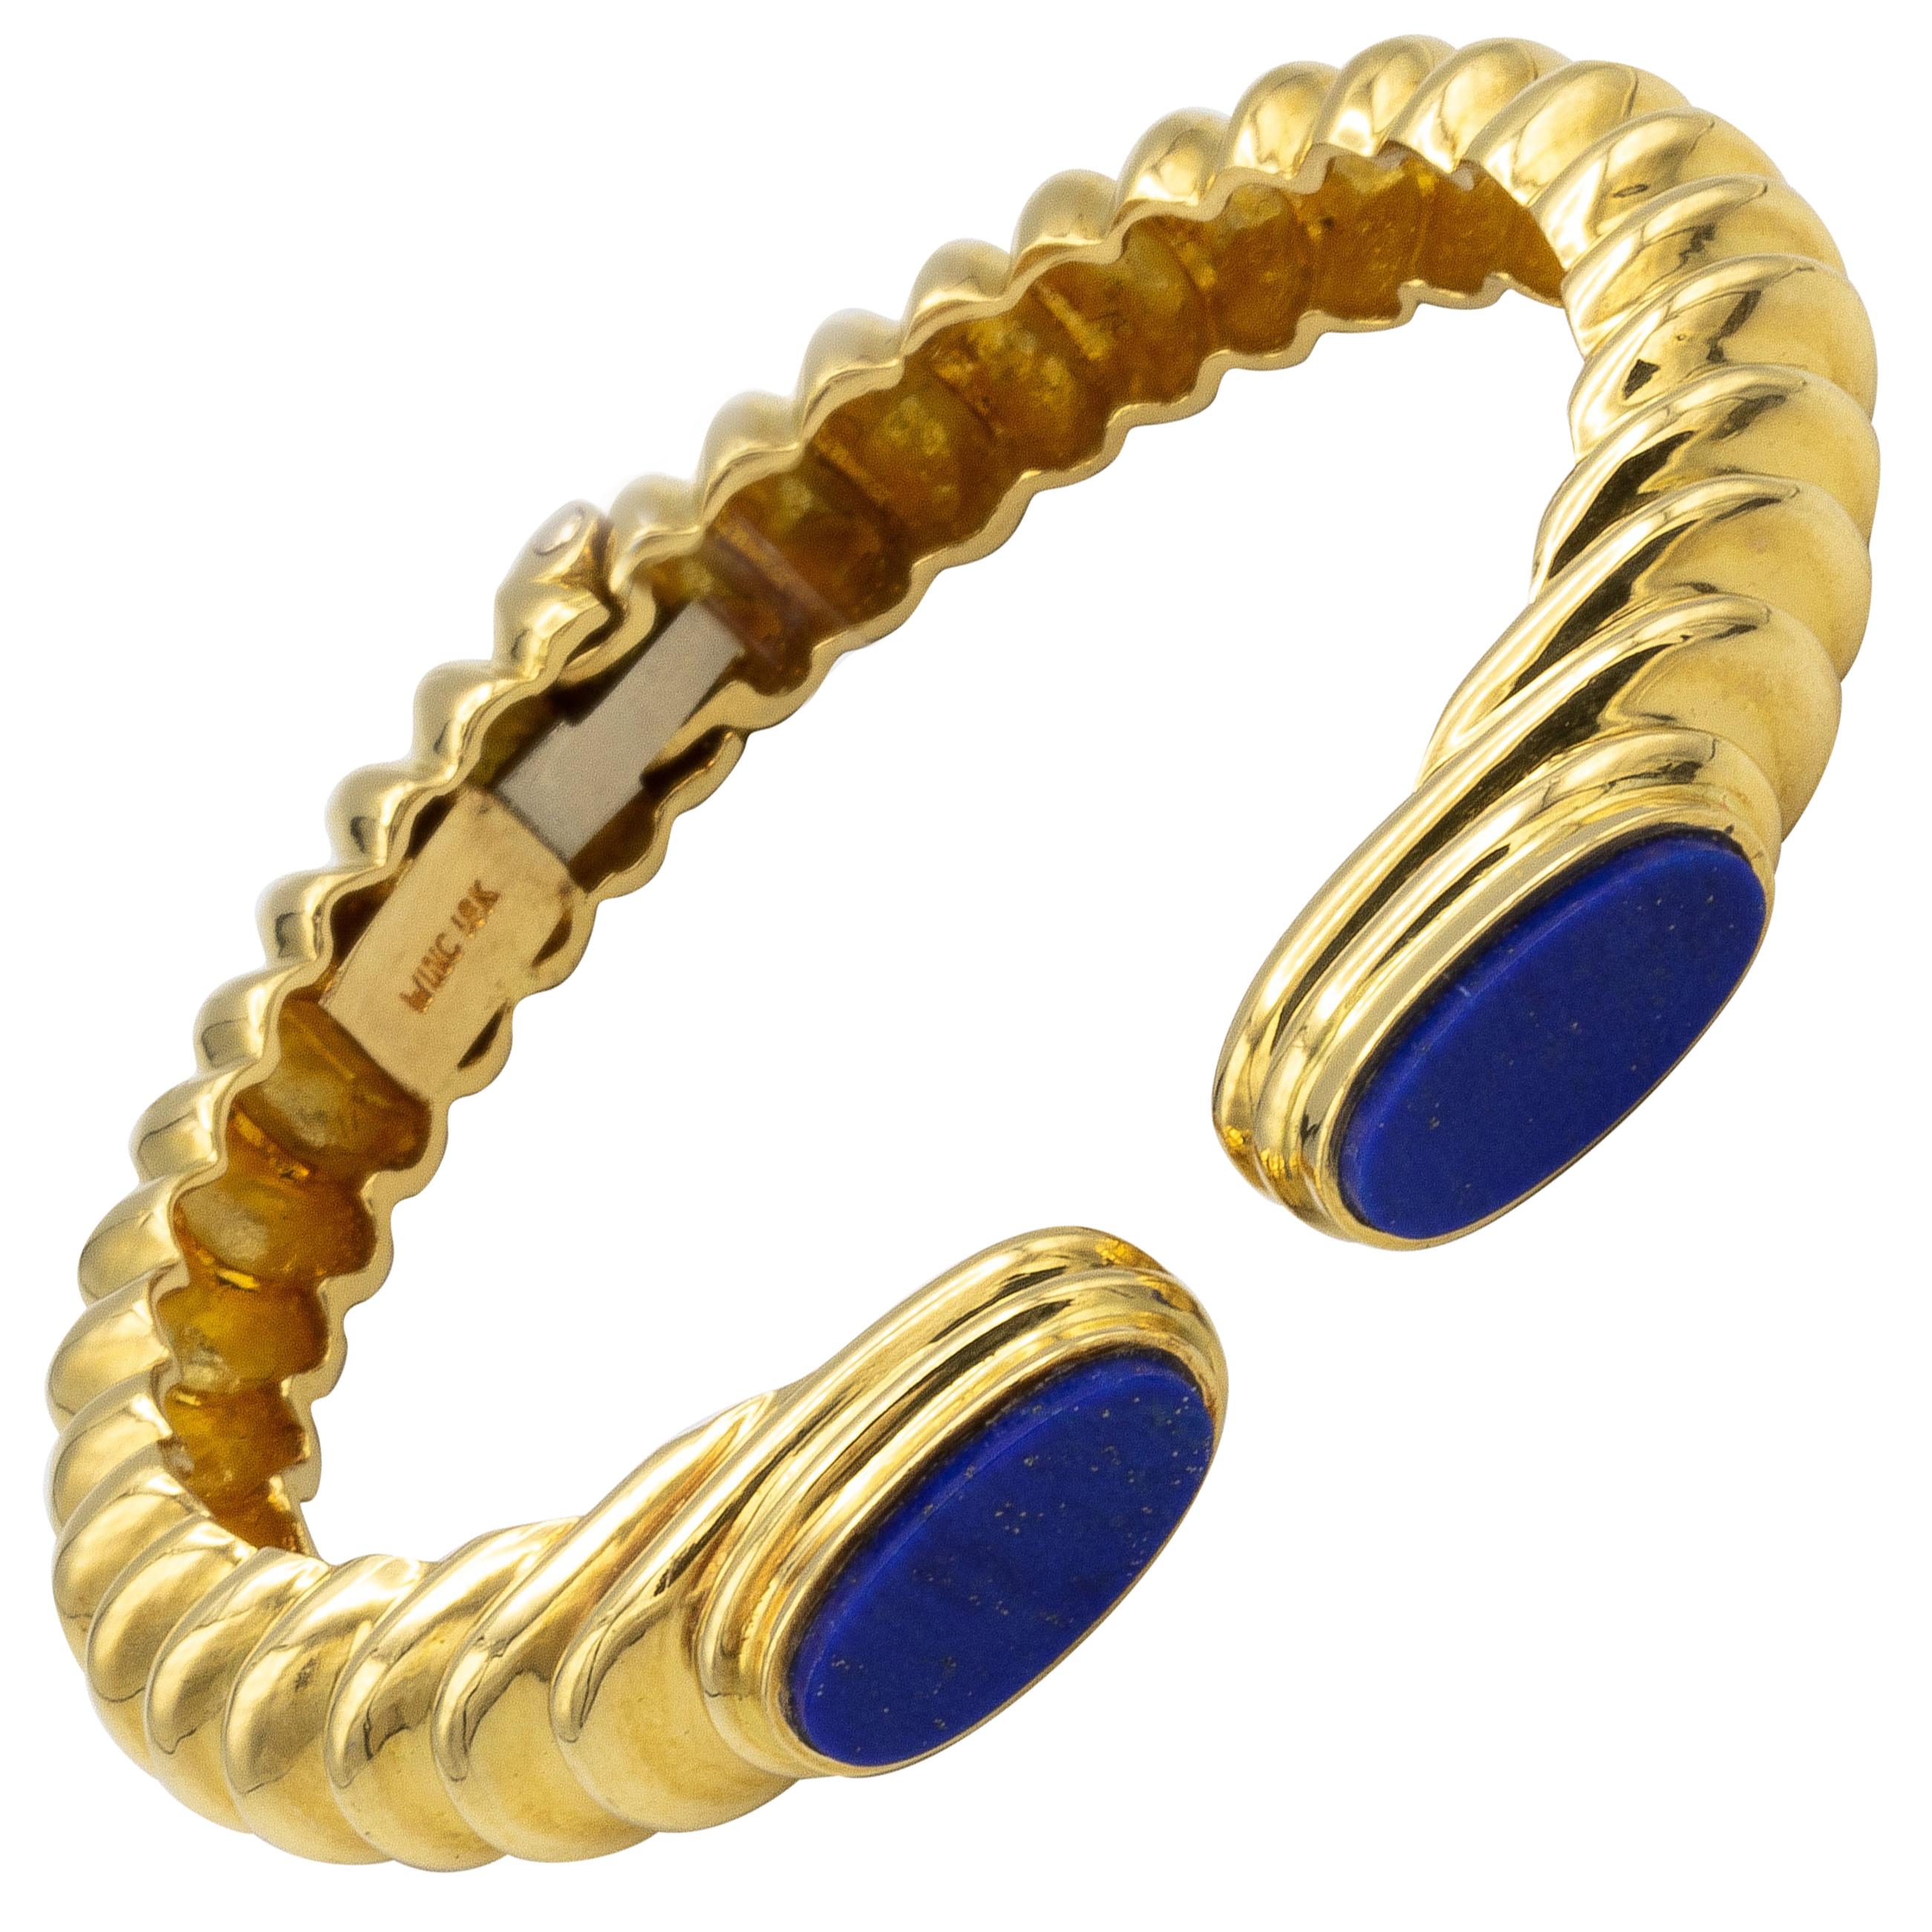 Robert Wander Lapis Lazuli Bracelet 18 Karat Yellow Gold